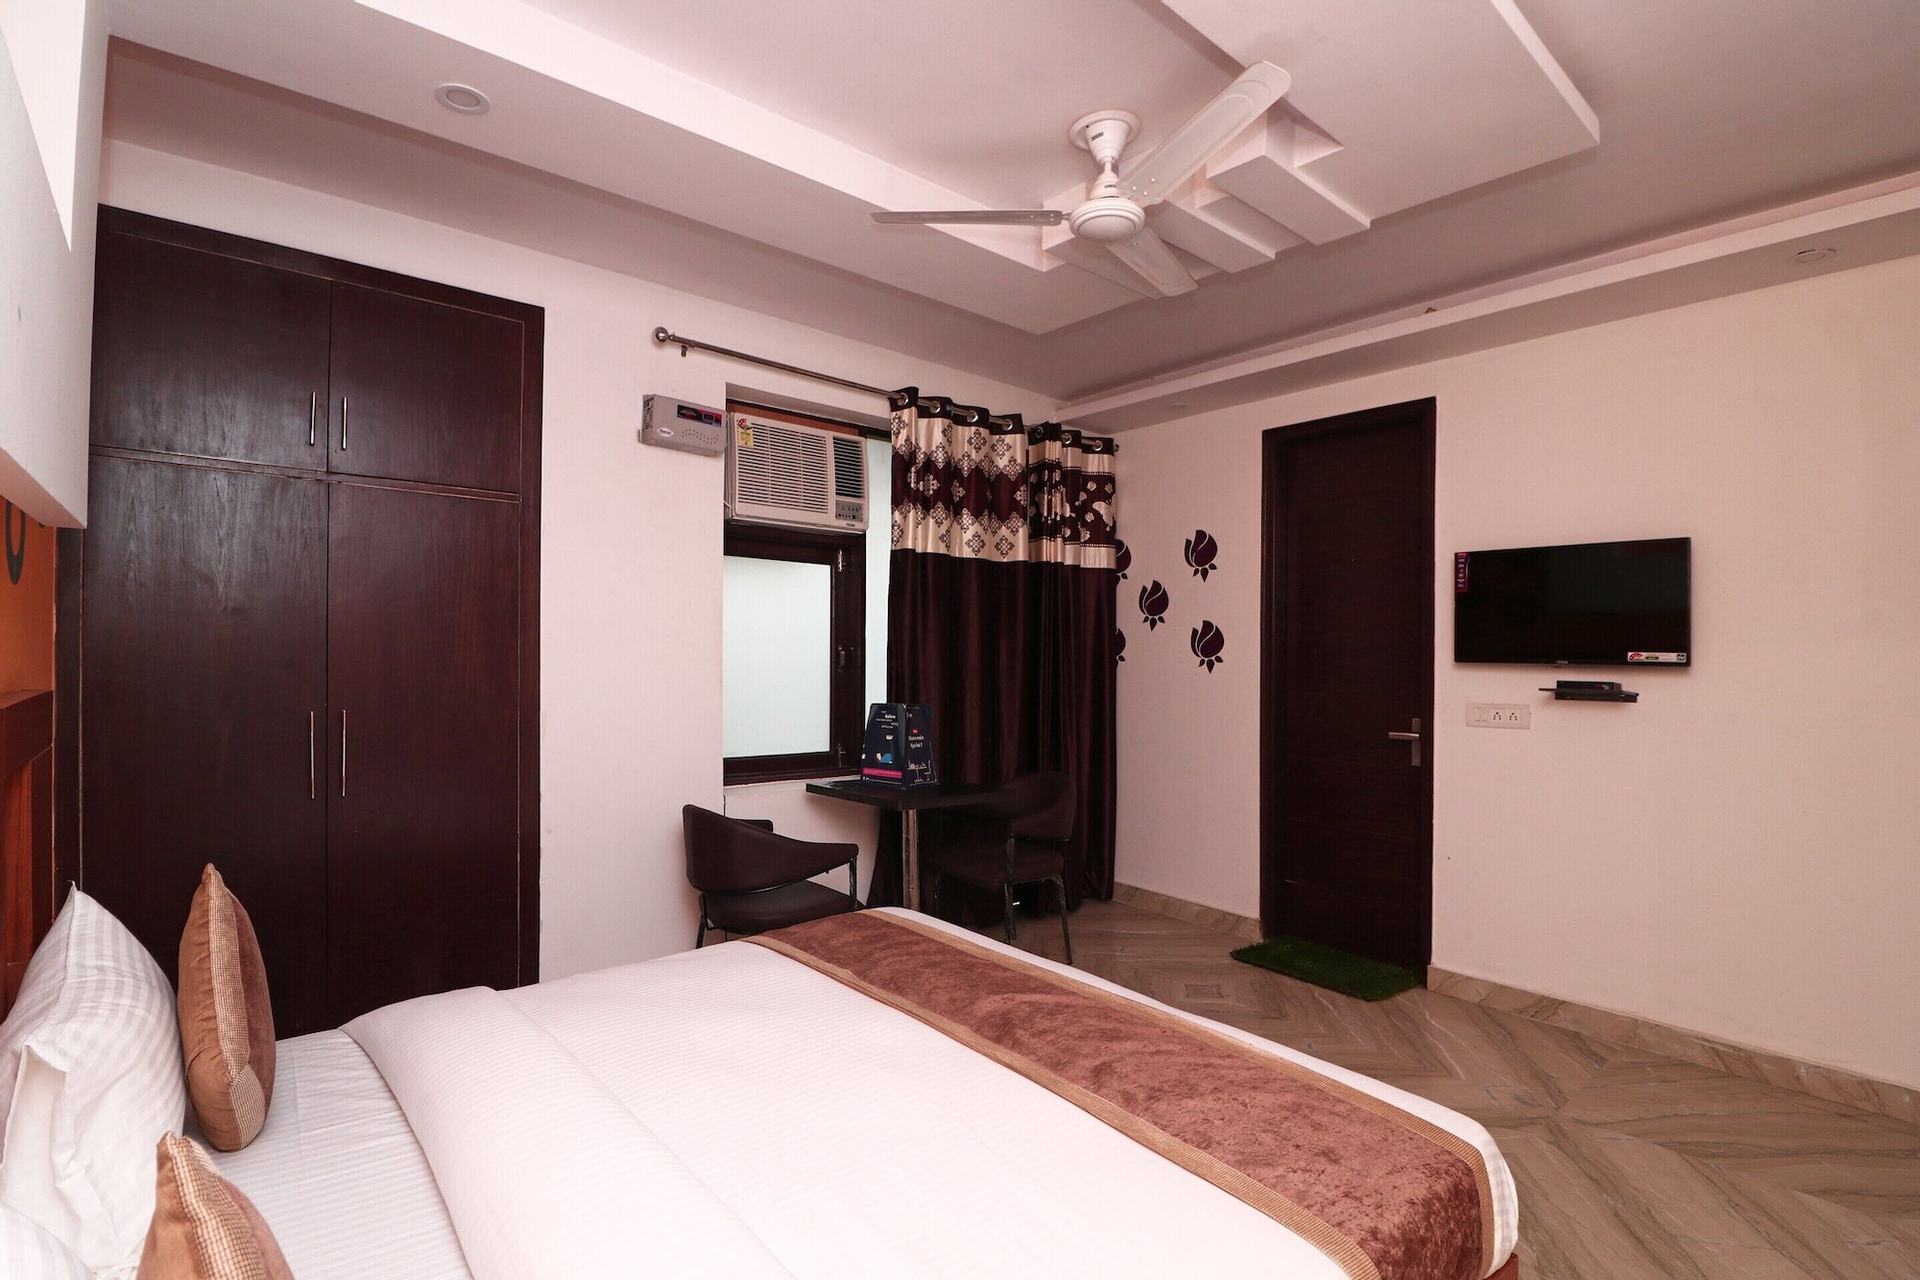 Room 4, OYO 16168 Maira Grand, Faridabad